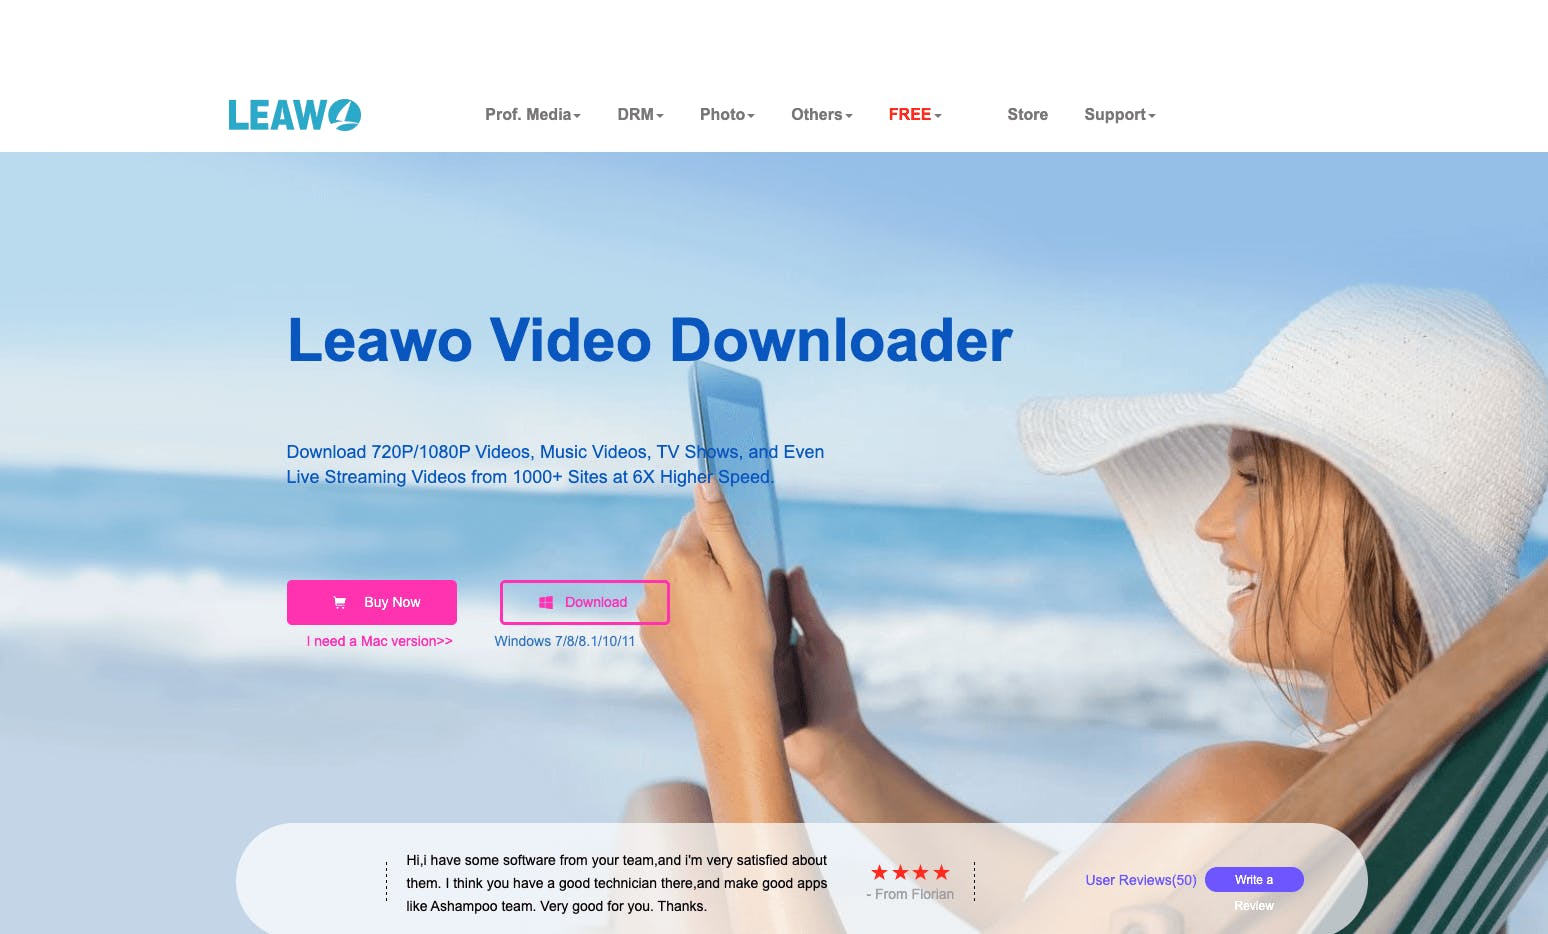 Leawo video downloader